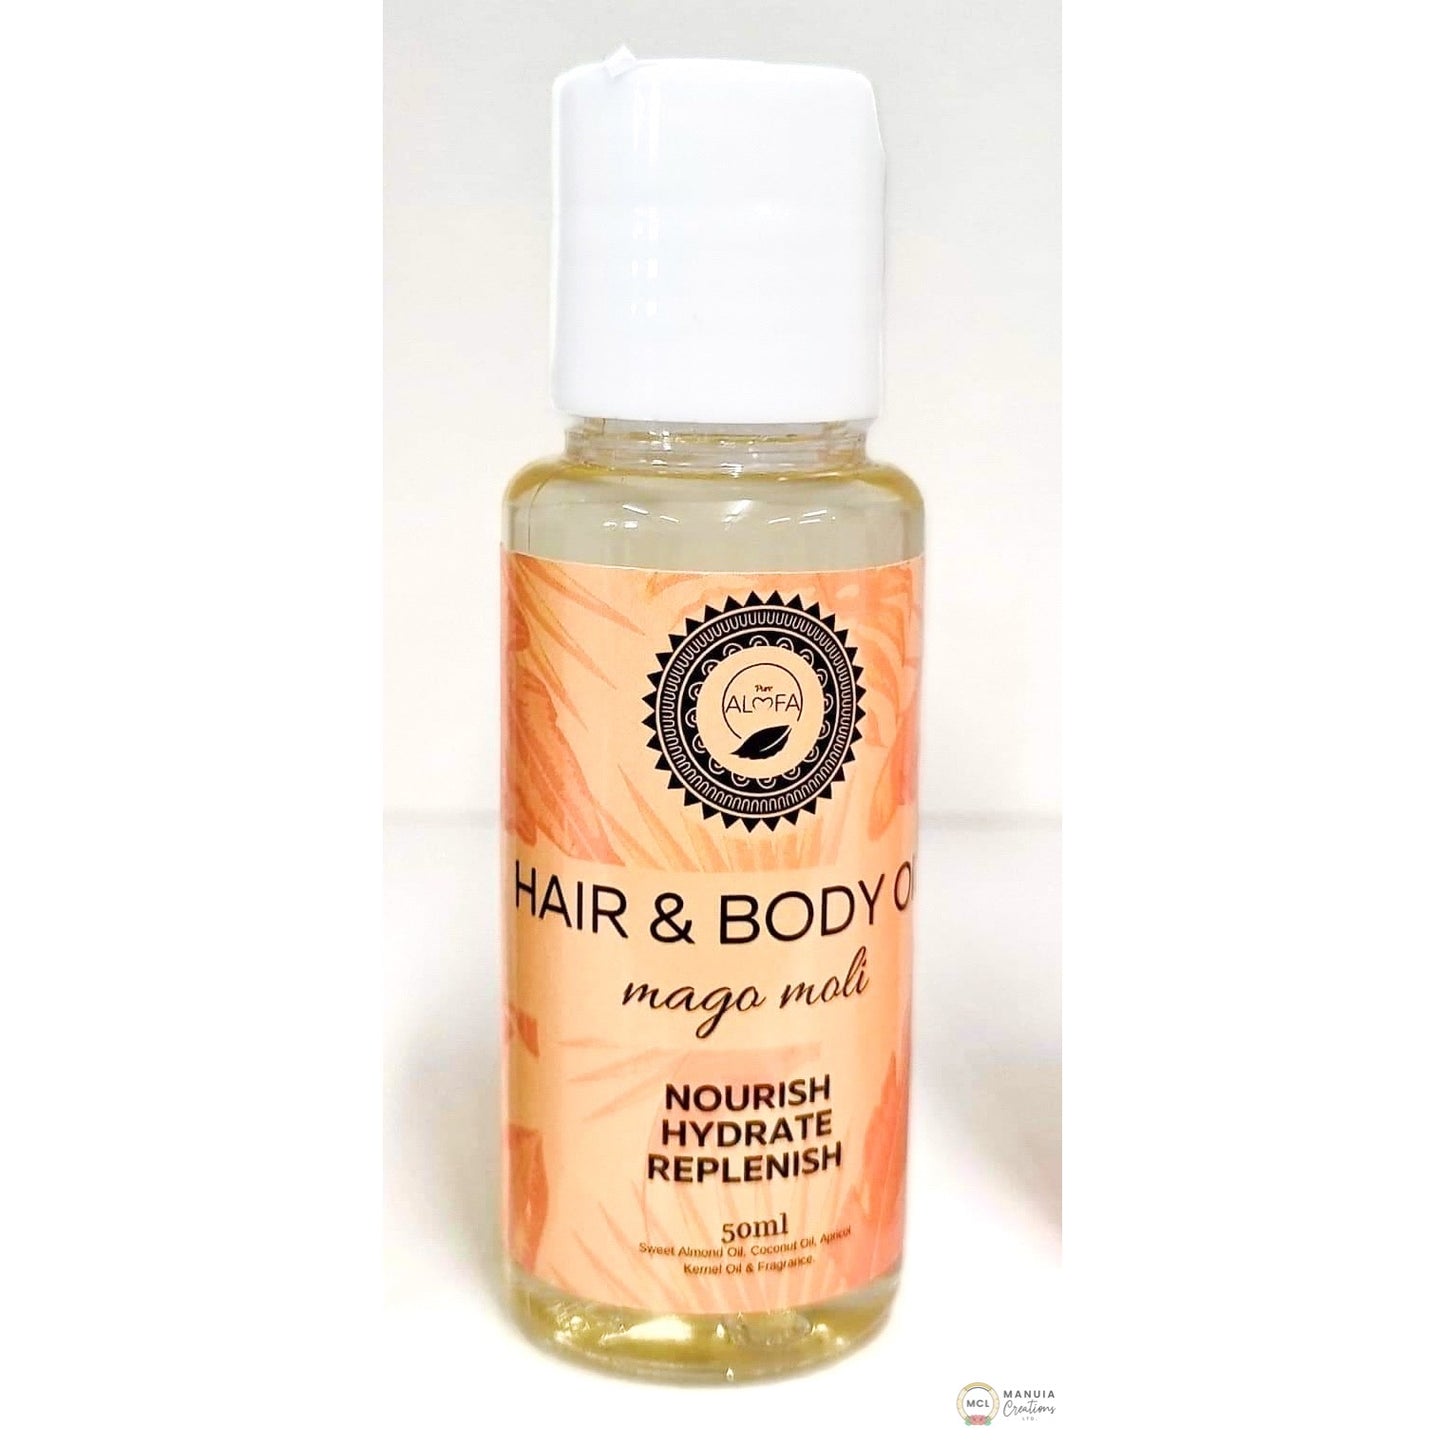 Hair & Body Oil (50ml)